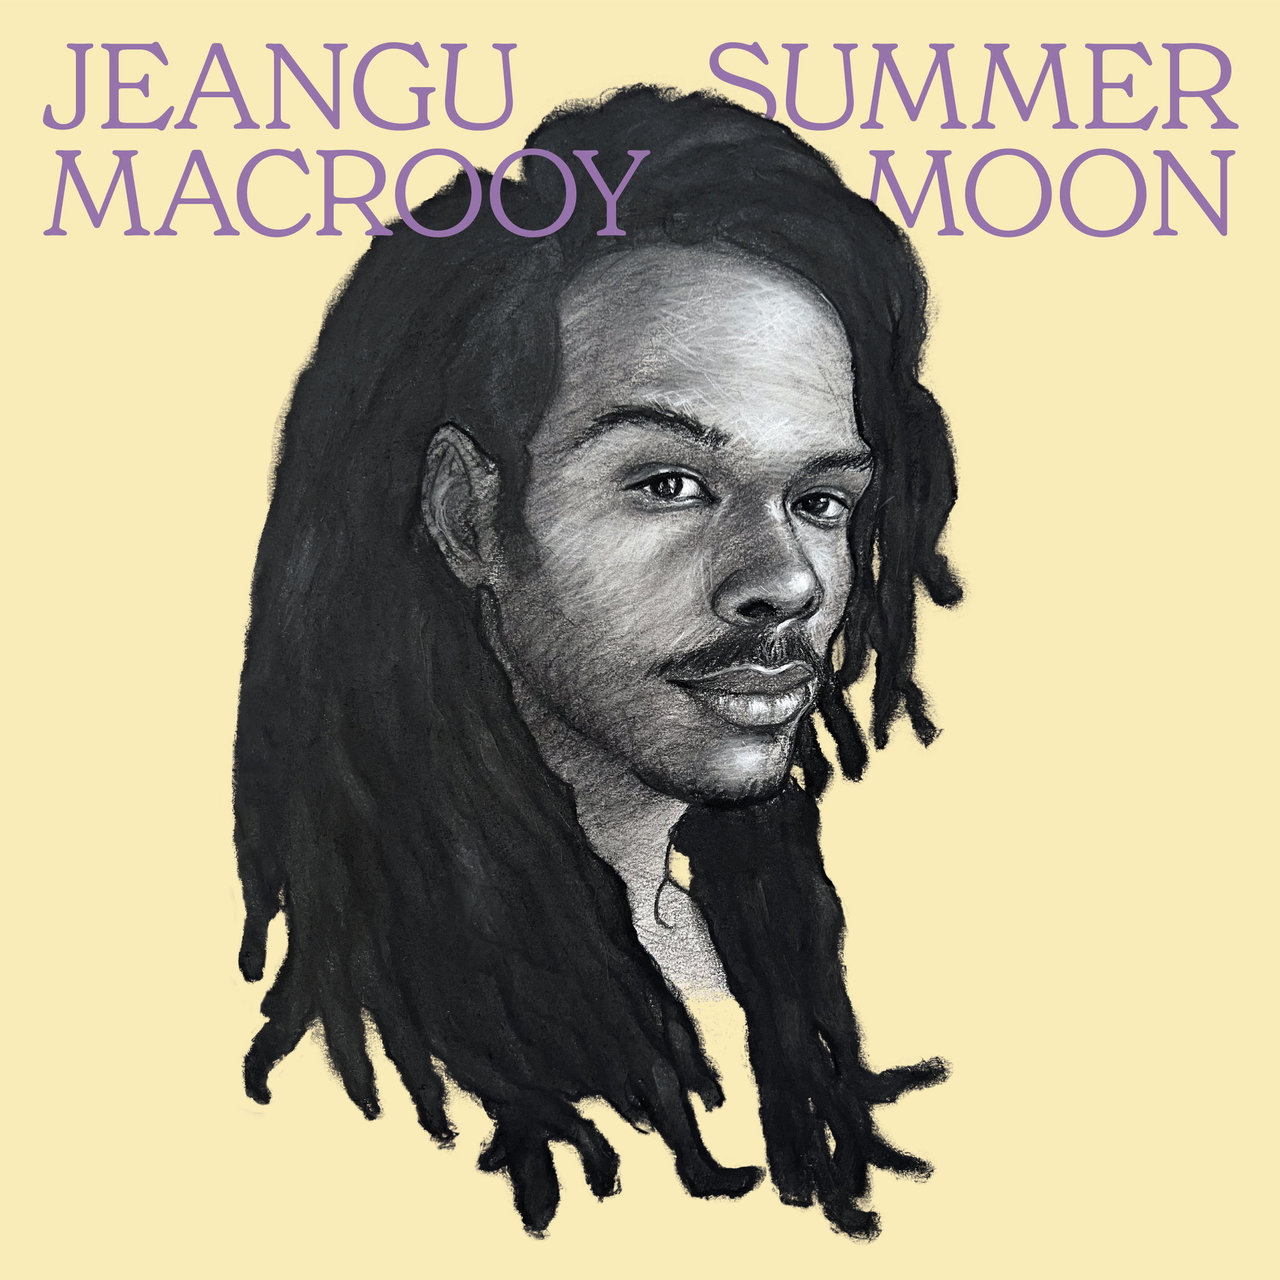 Jeangu Macrooy Summer Moon cover artwork